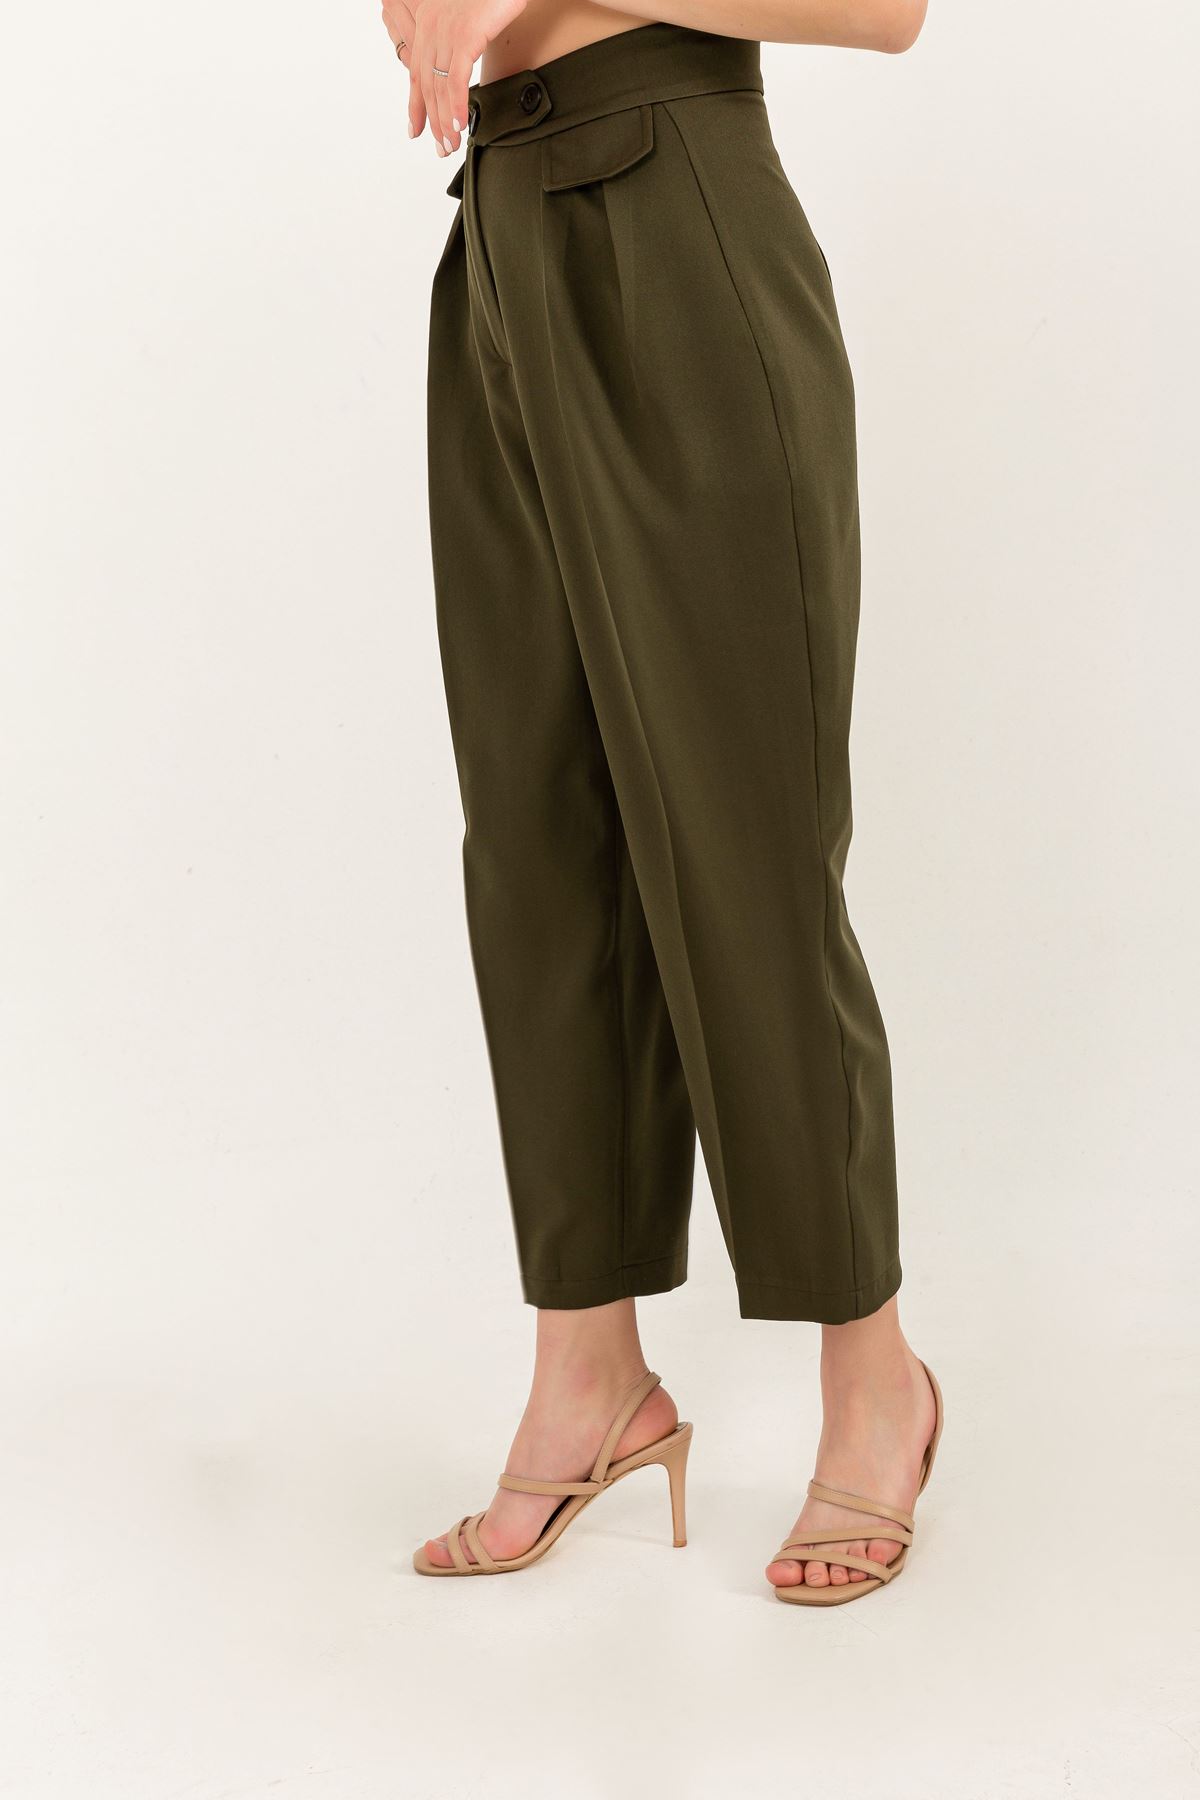 Atlas Fabric Ankle Length Carrot Style Women Trouser-Khaki 